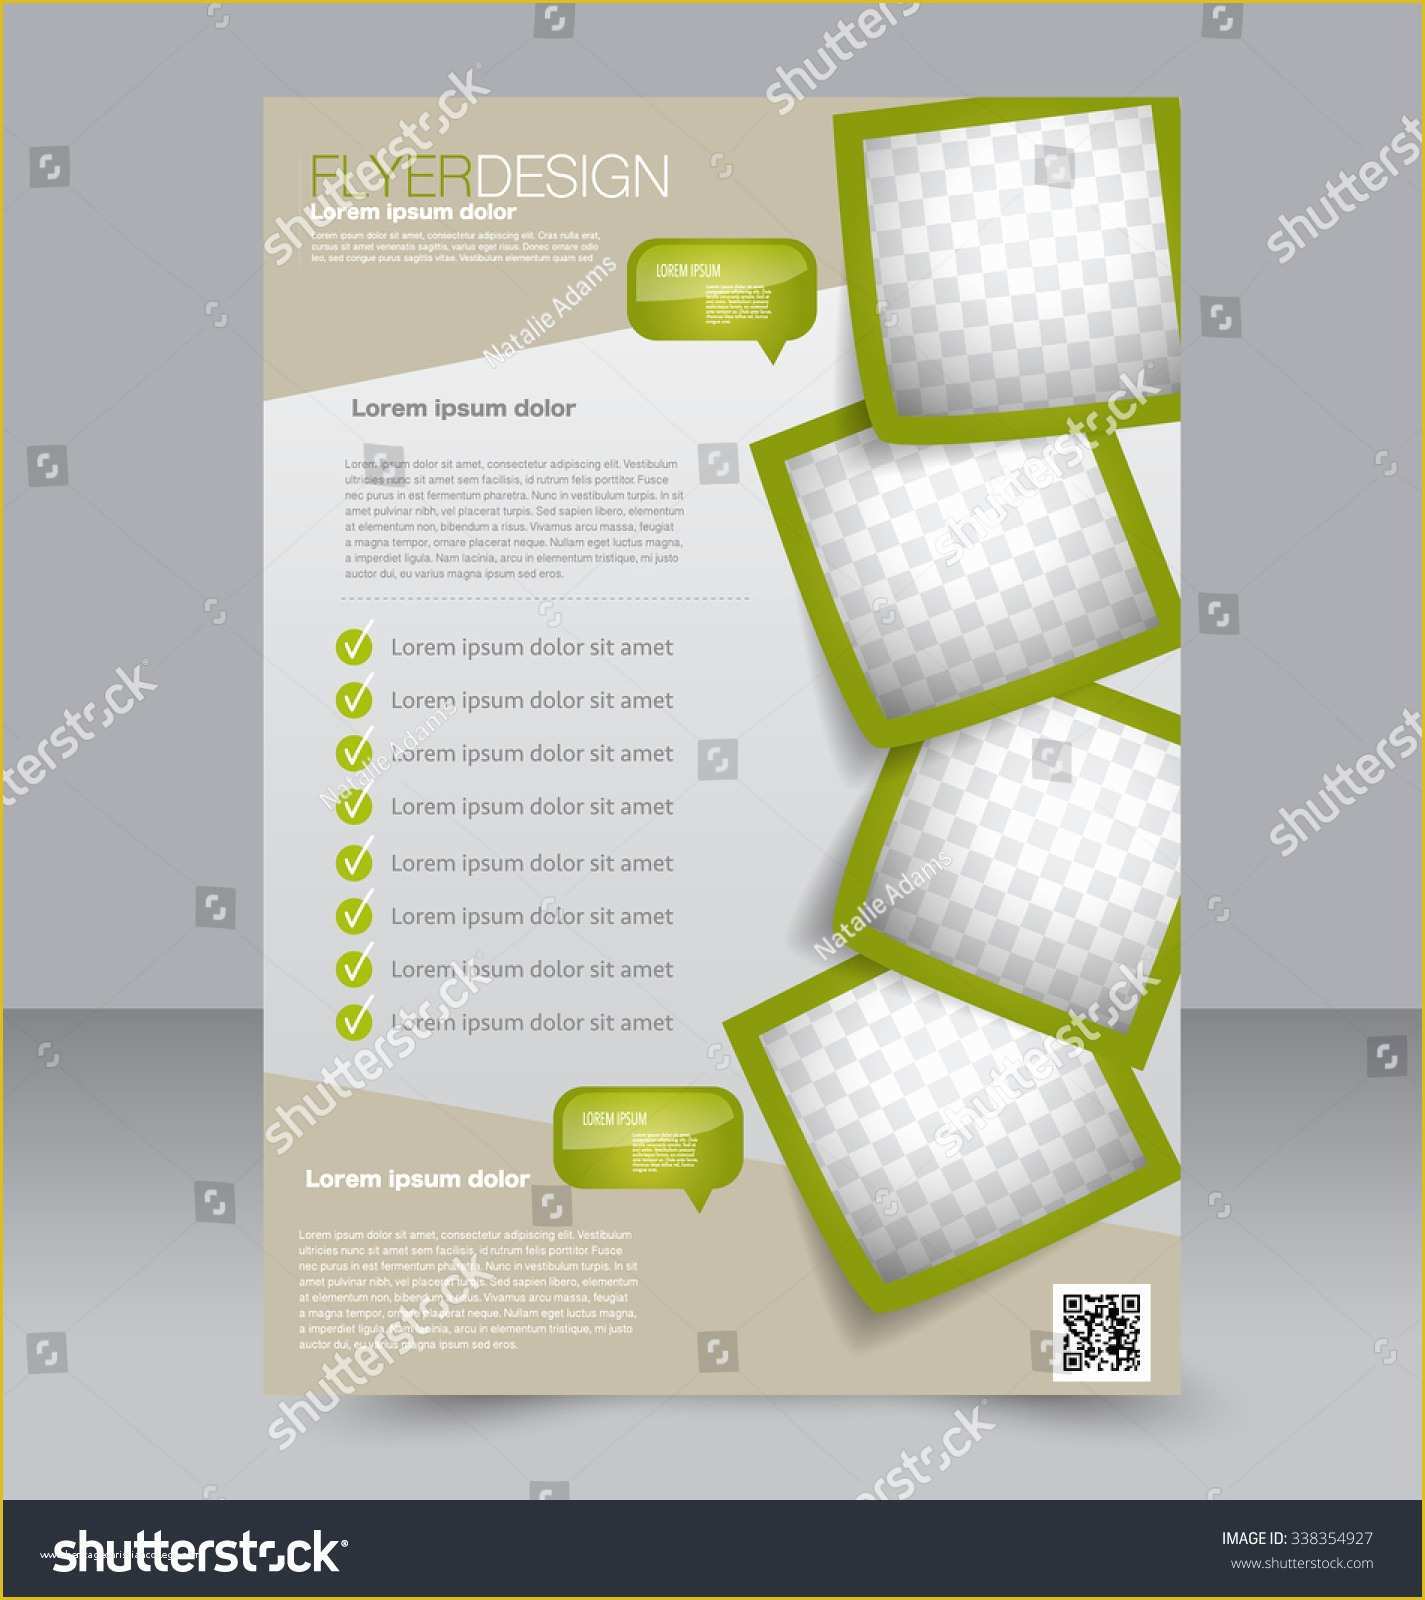 Free Editable Flyer Templates Of Flyer Template Brochure Design Editable A4 Stock Vector